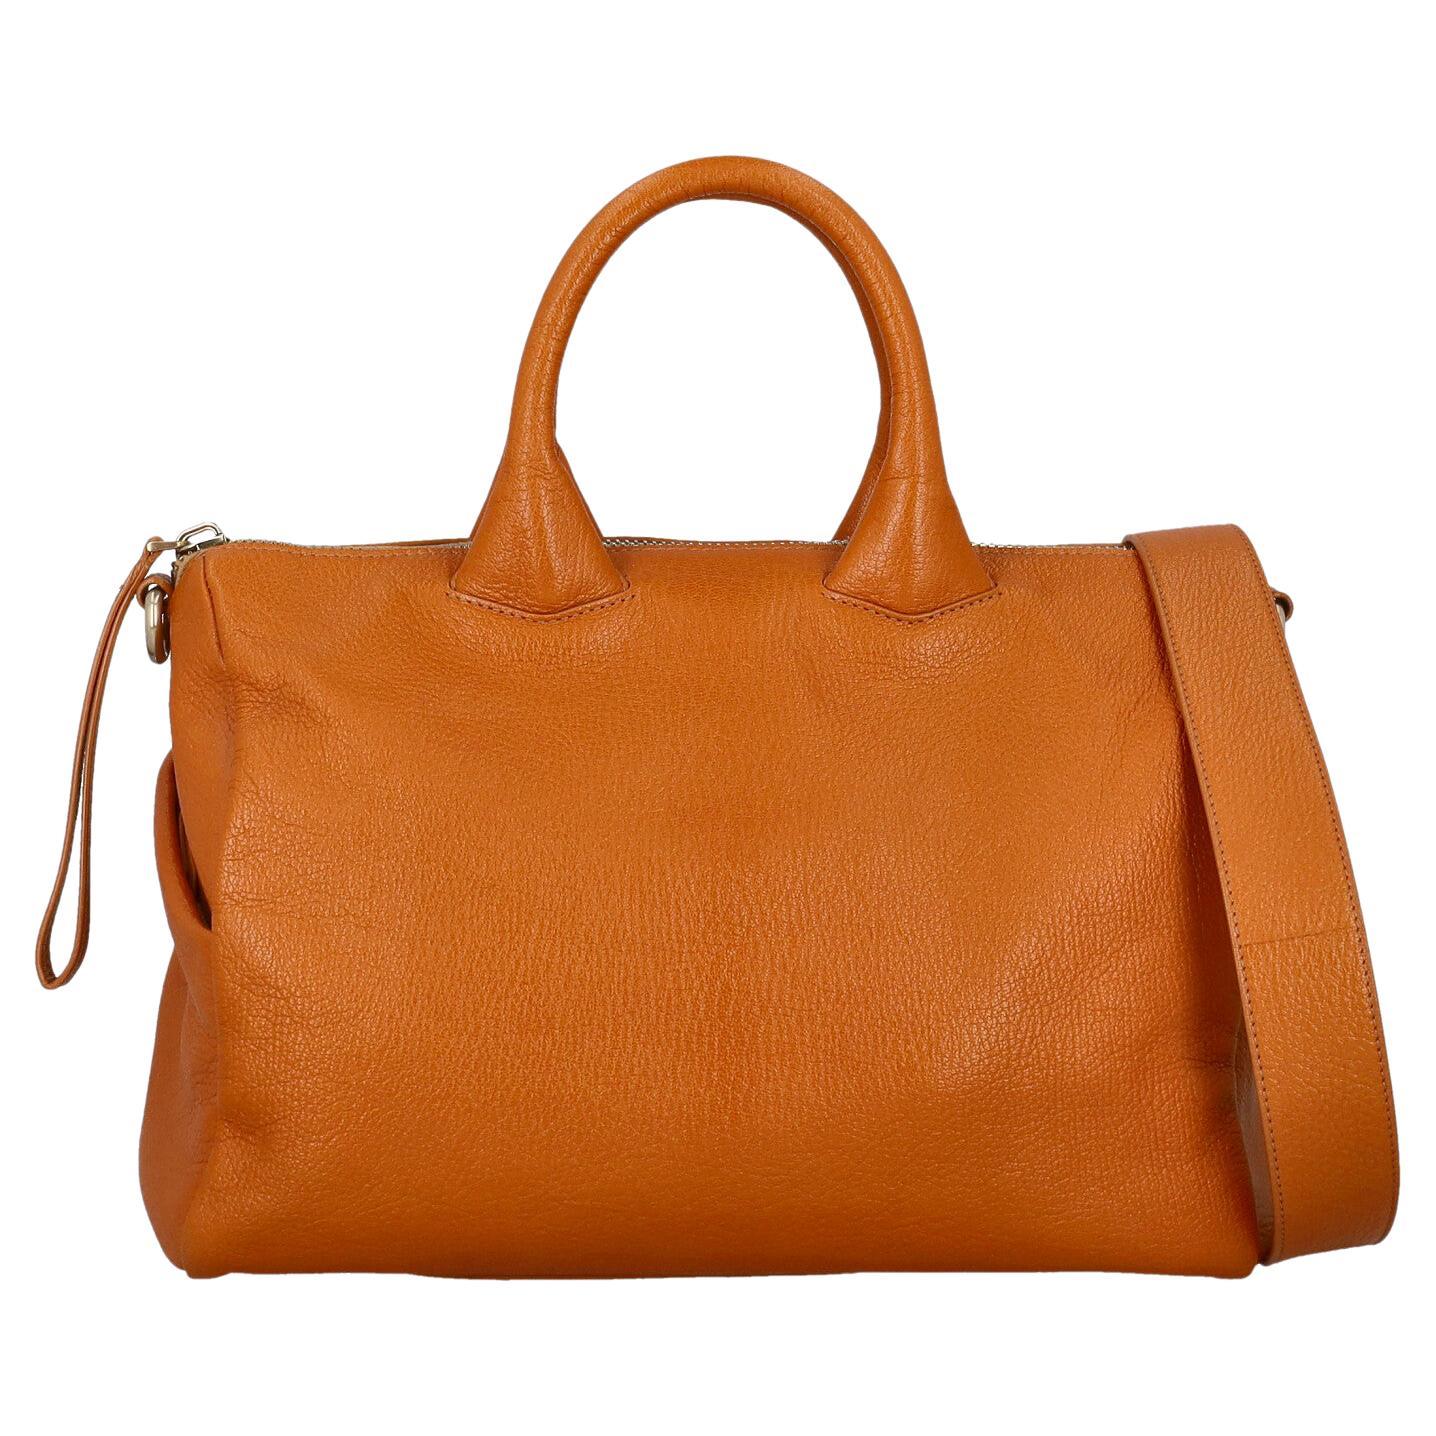 Corto Moltedo Women Handbags Orange Leather  For Sale